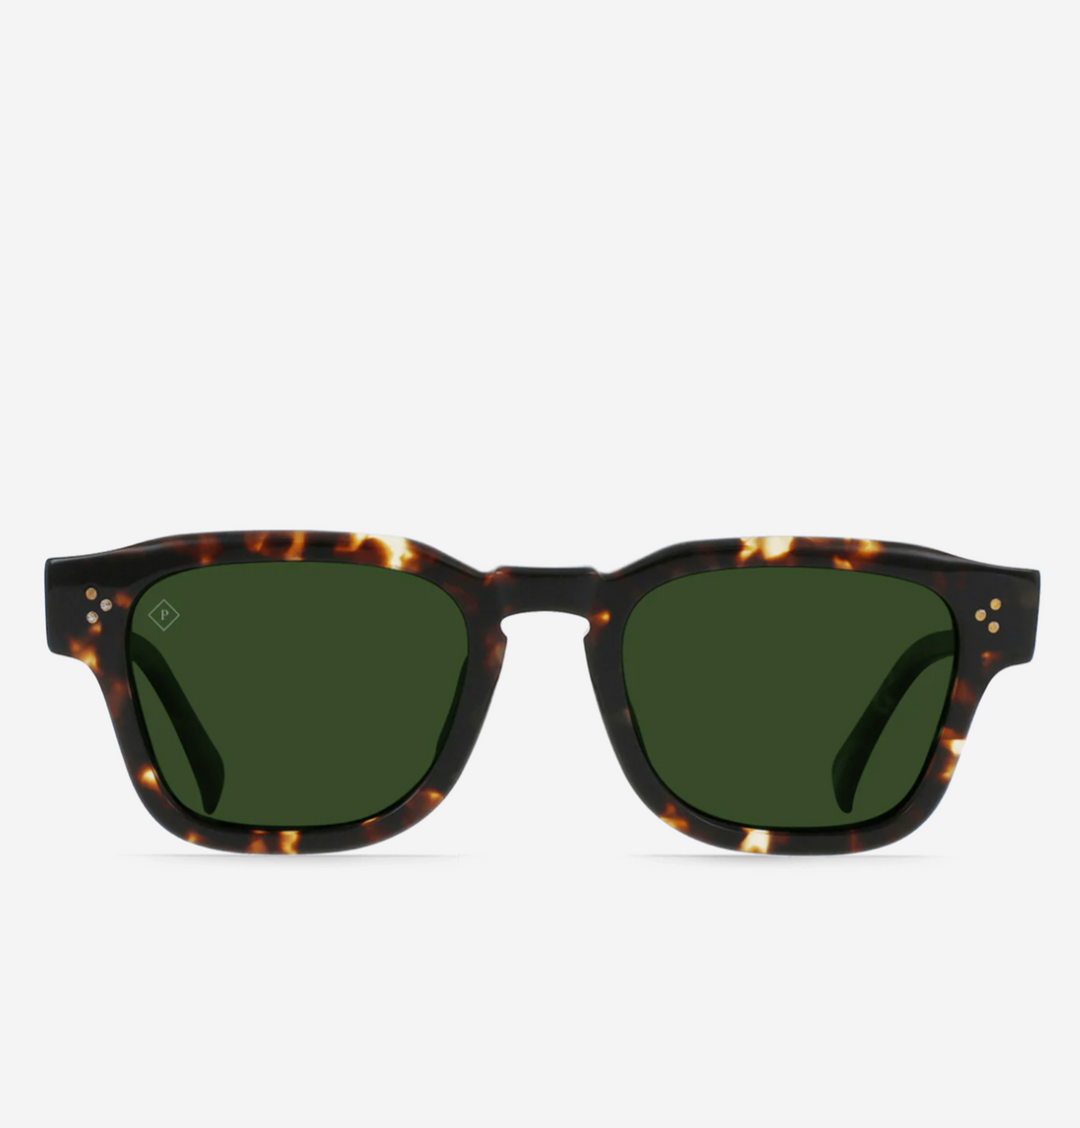 Rece Sunglasses - Bringle Tortoise / Green Polarized